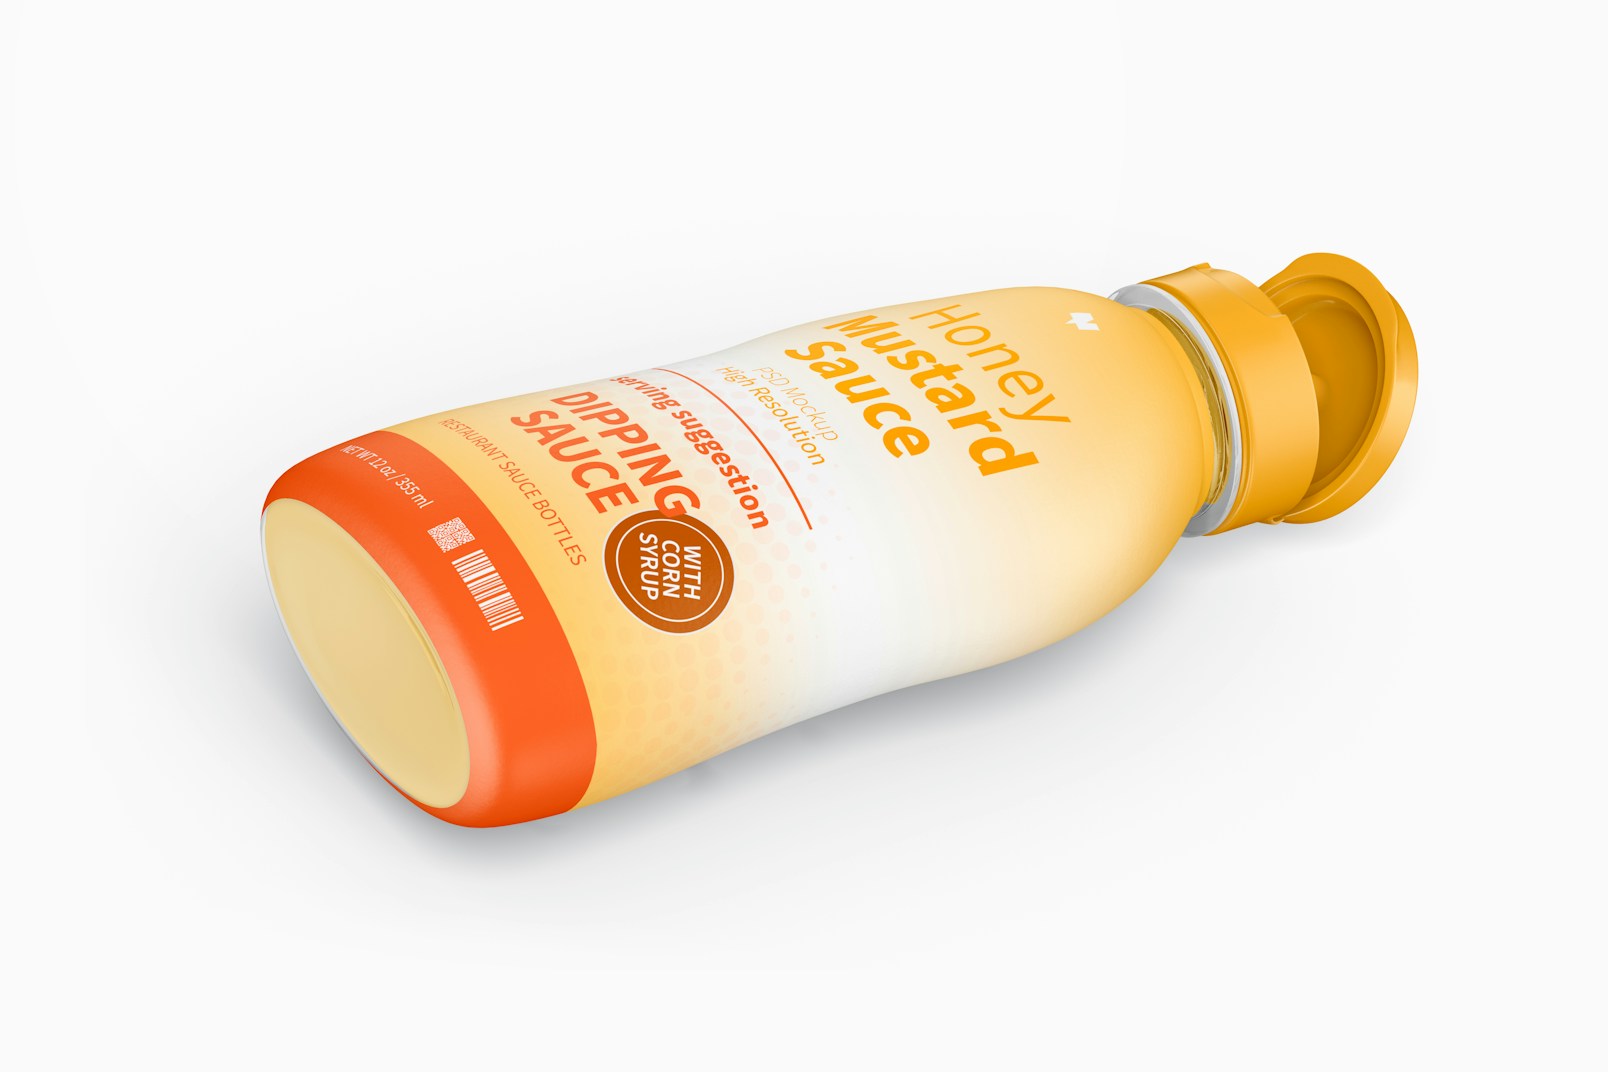 12 oz Honey Mustard Sauce Bottle Mockup, Isometric View